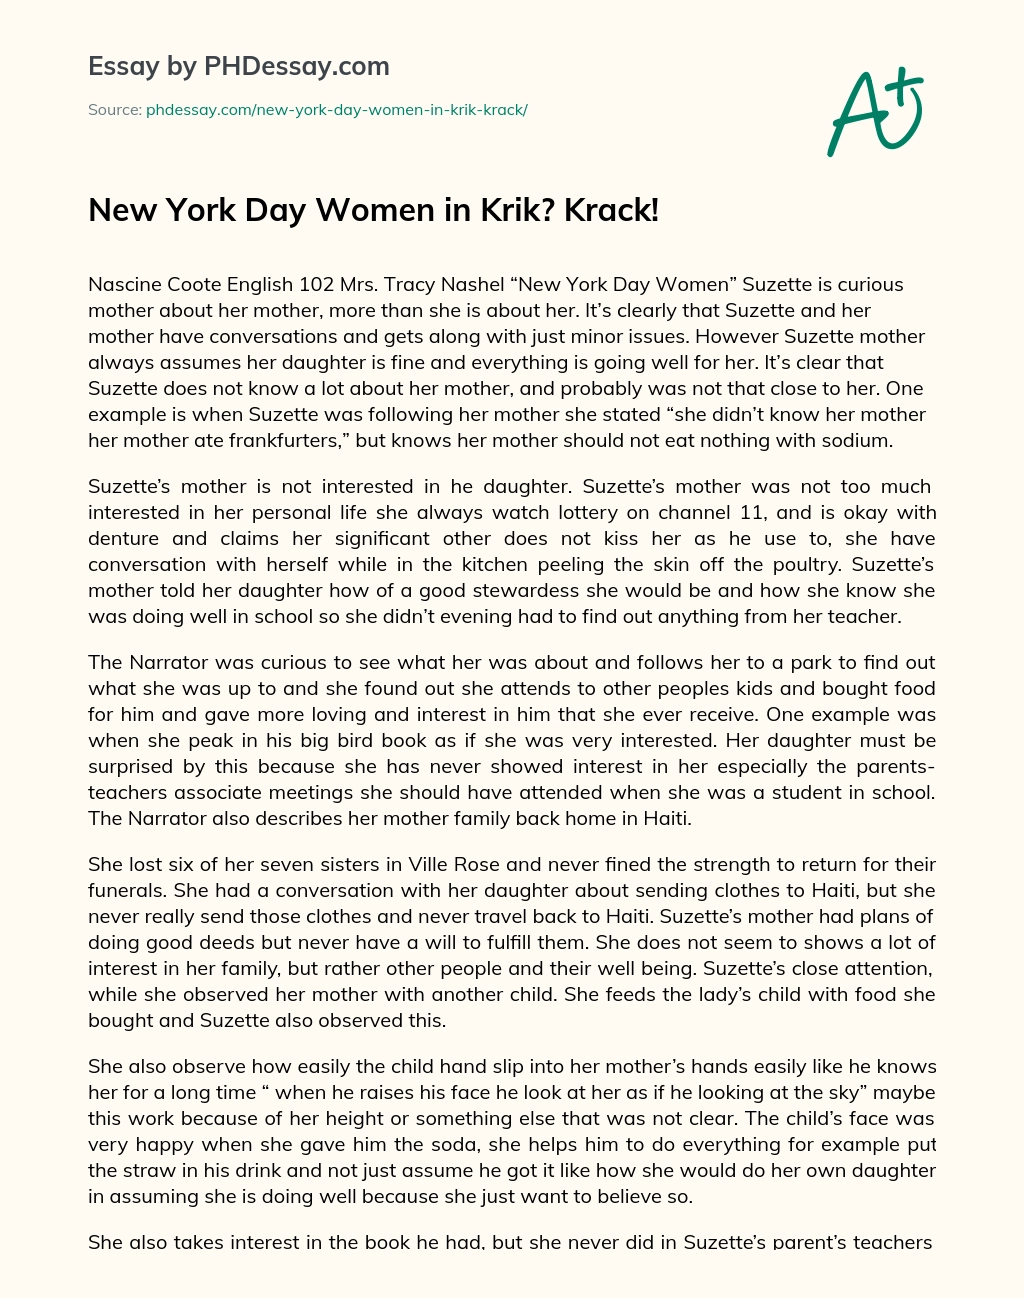 New York Day Women in Krik? Krack! essay